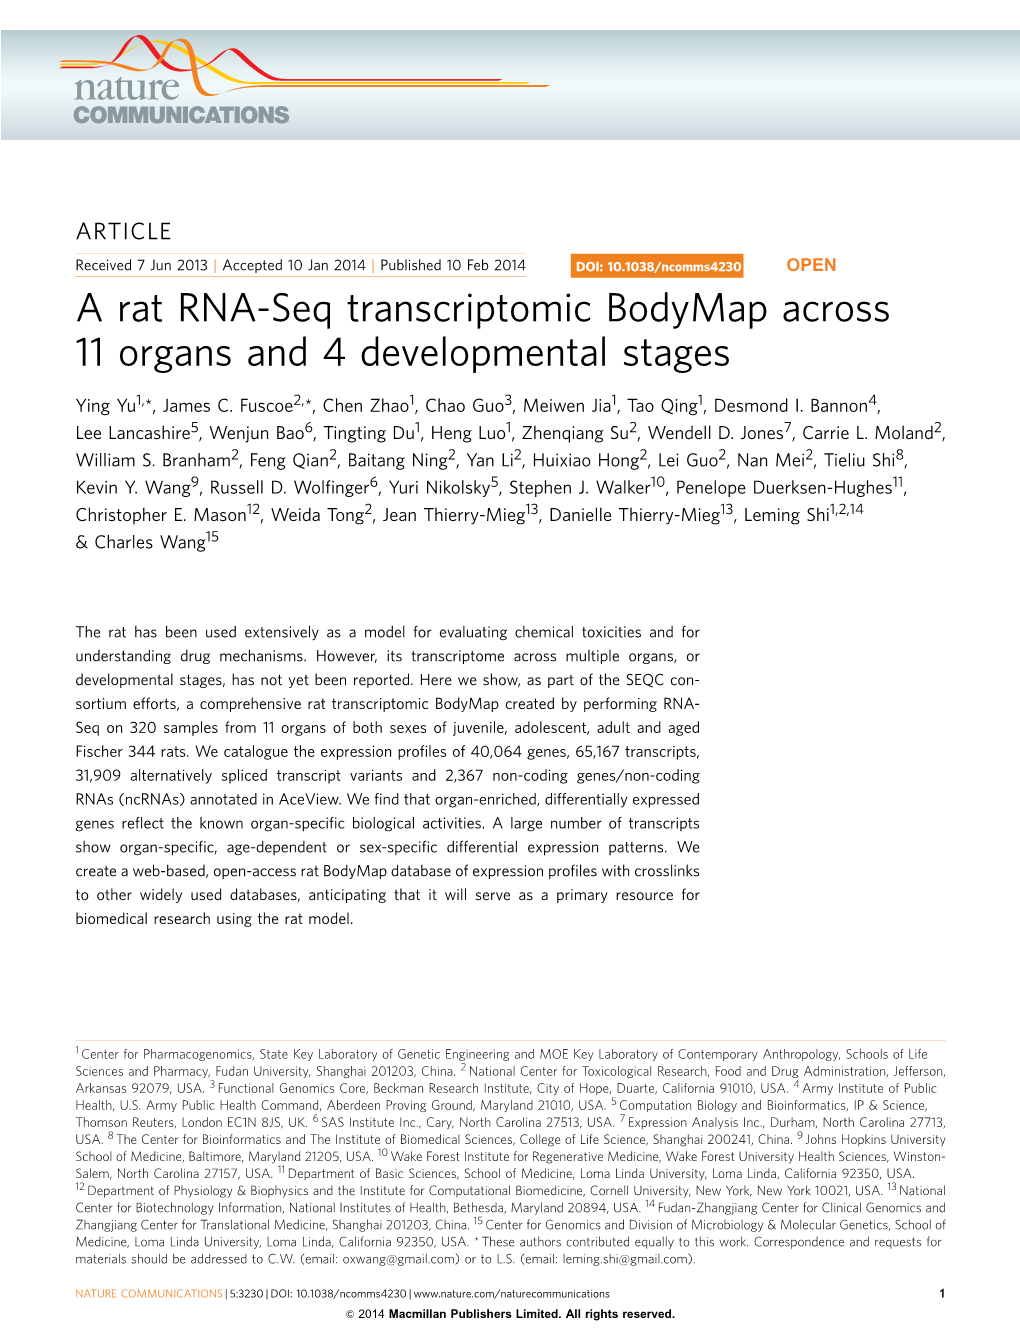 A Rat RNA-Seq Transcriptomic Bodymap Across 11 Organs and 4 Developmental Stages